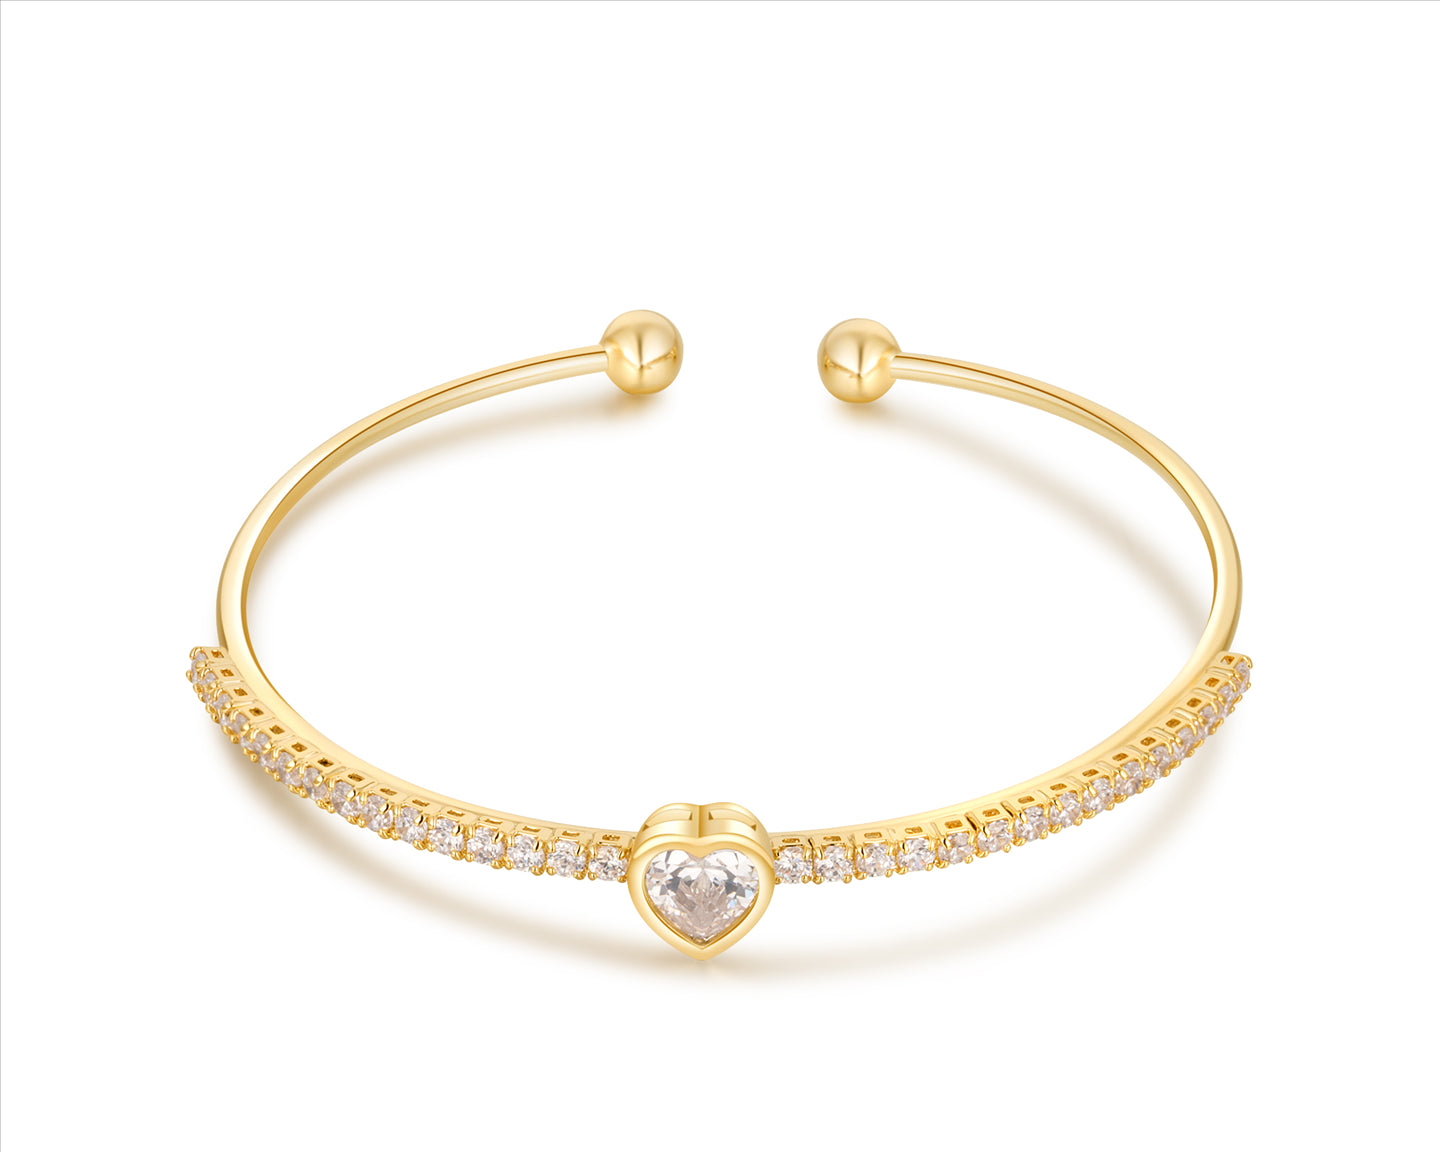 Buyless Fashion Girls Heart Bangle Bracelet With White Stones Jewelry